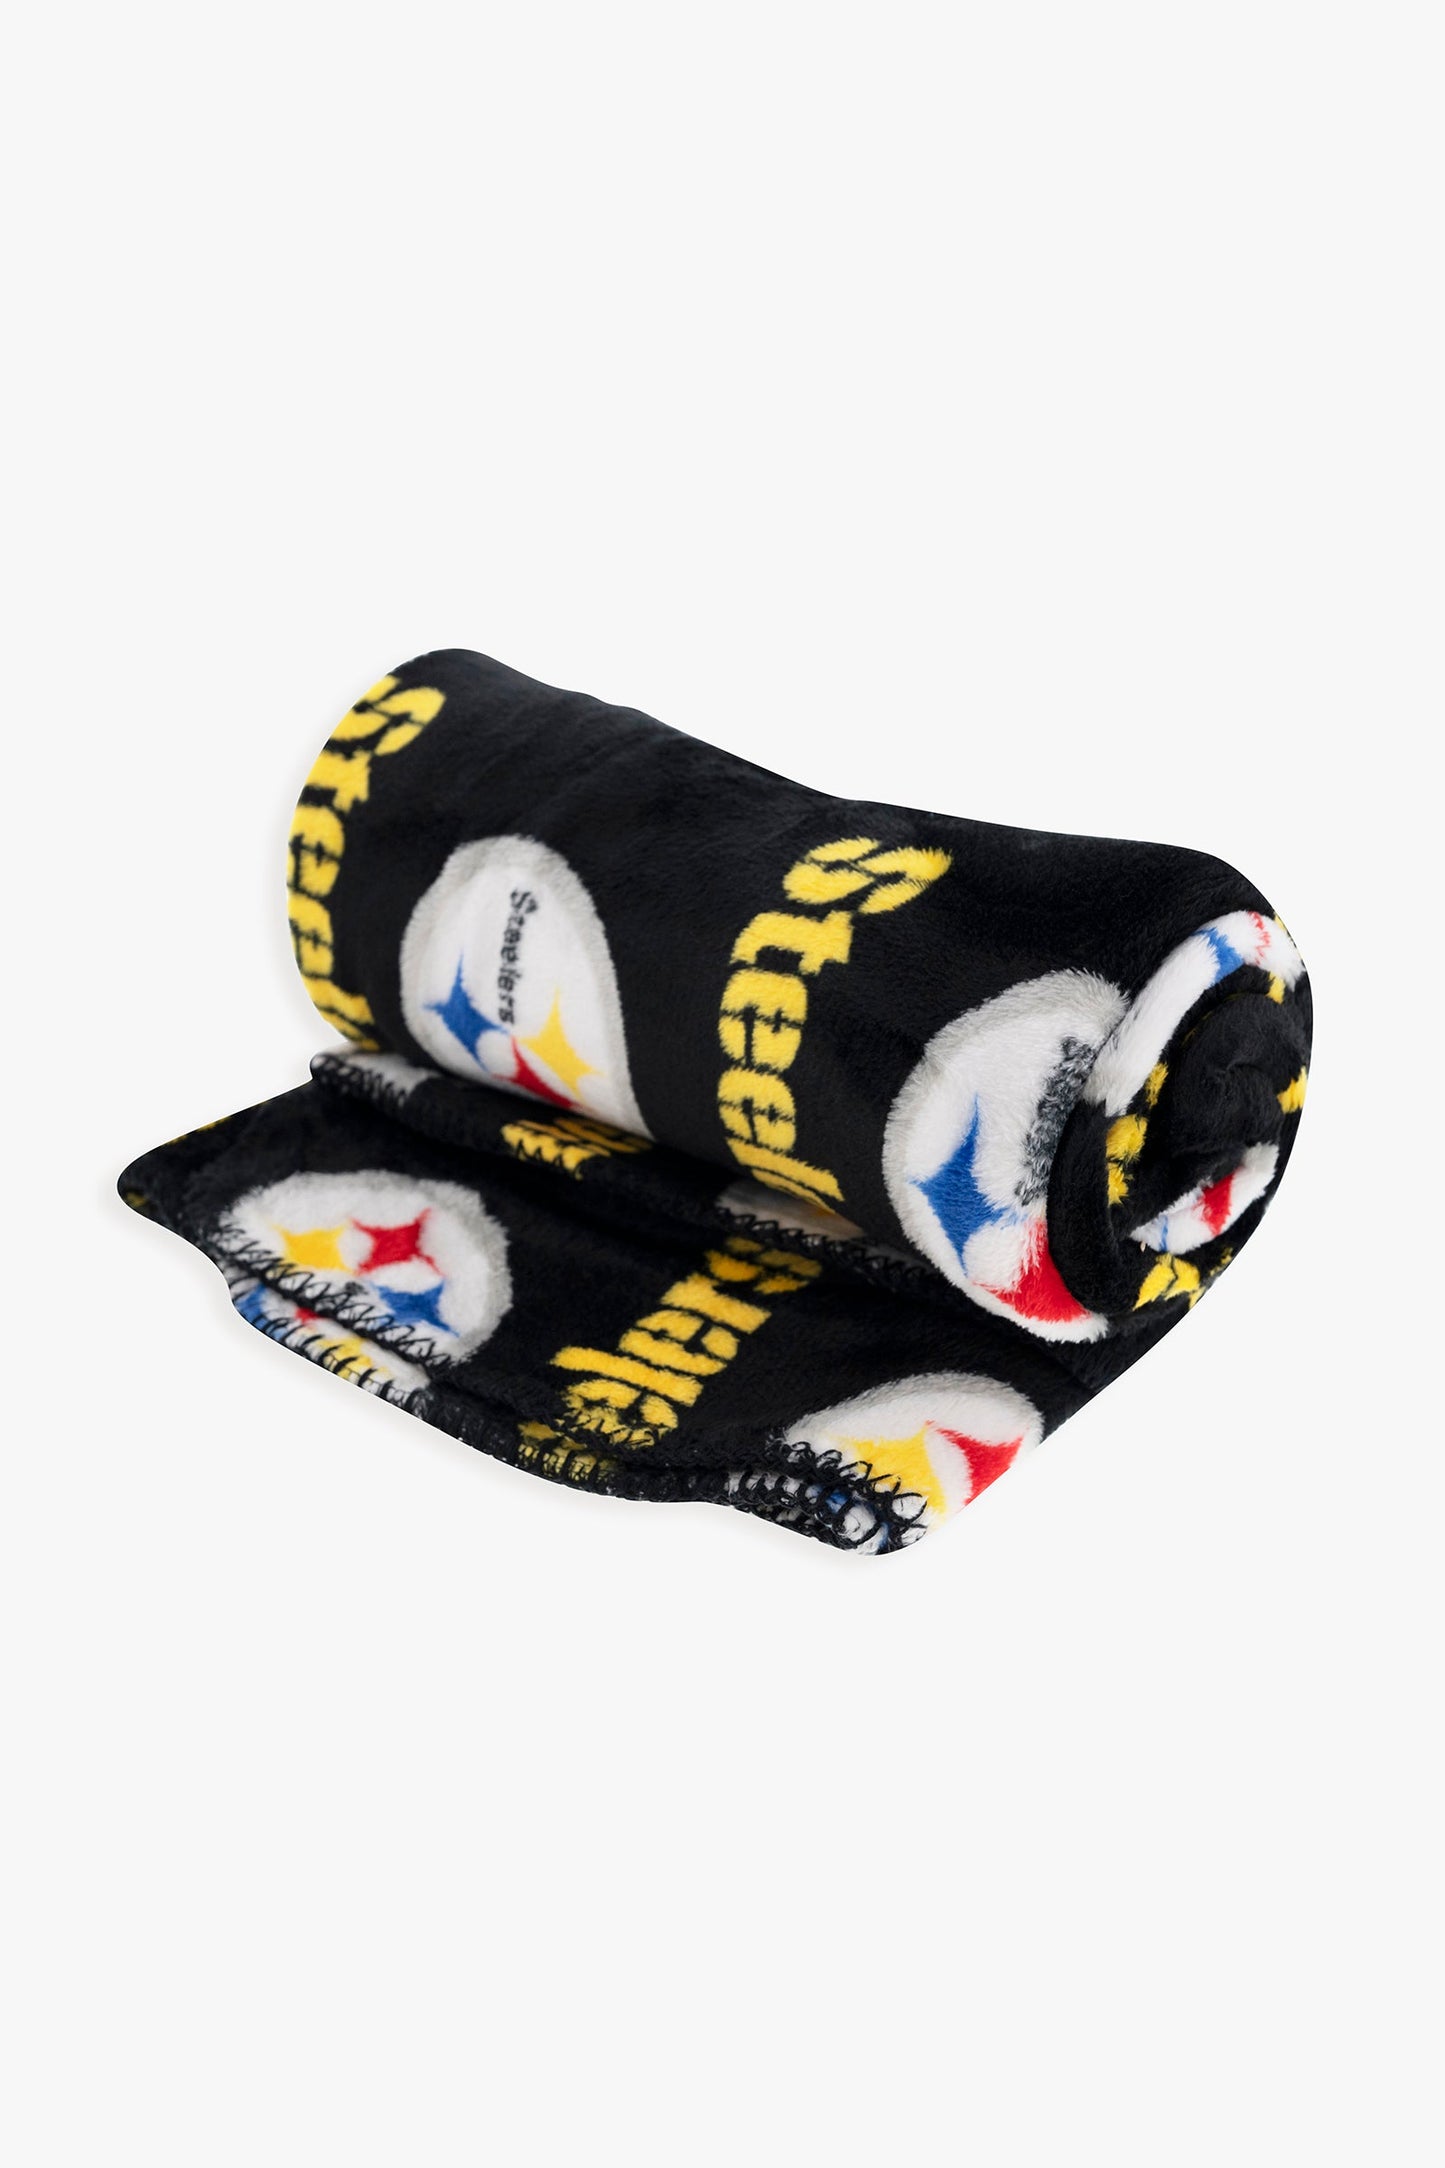 NFL Coral Fleece Travel Throw Blanket with Team Logos | 150cm x 120cm (59" x 47")